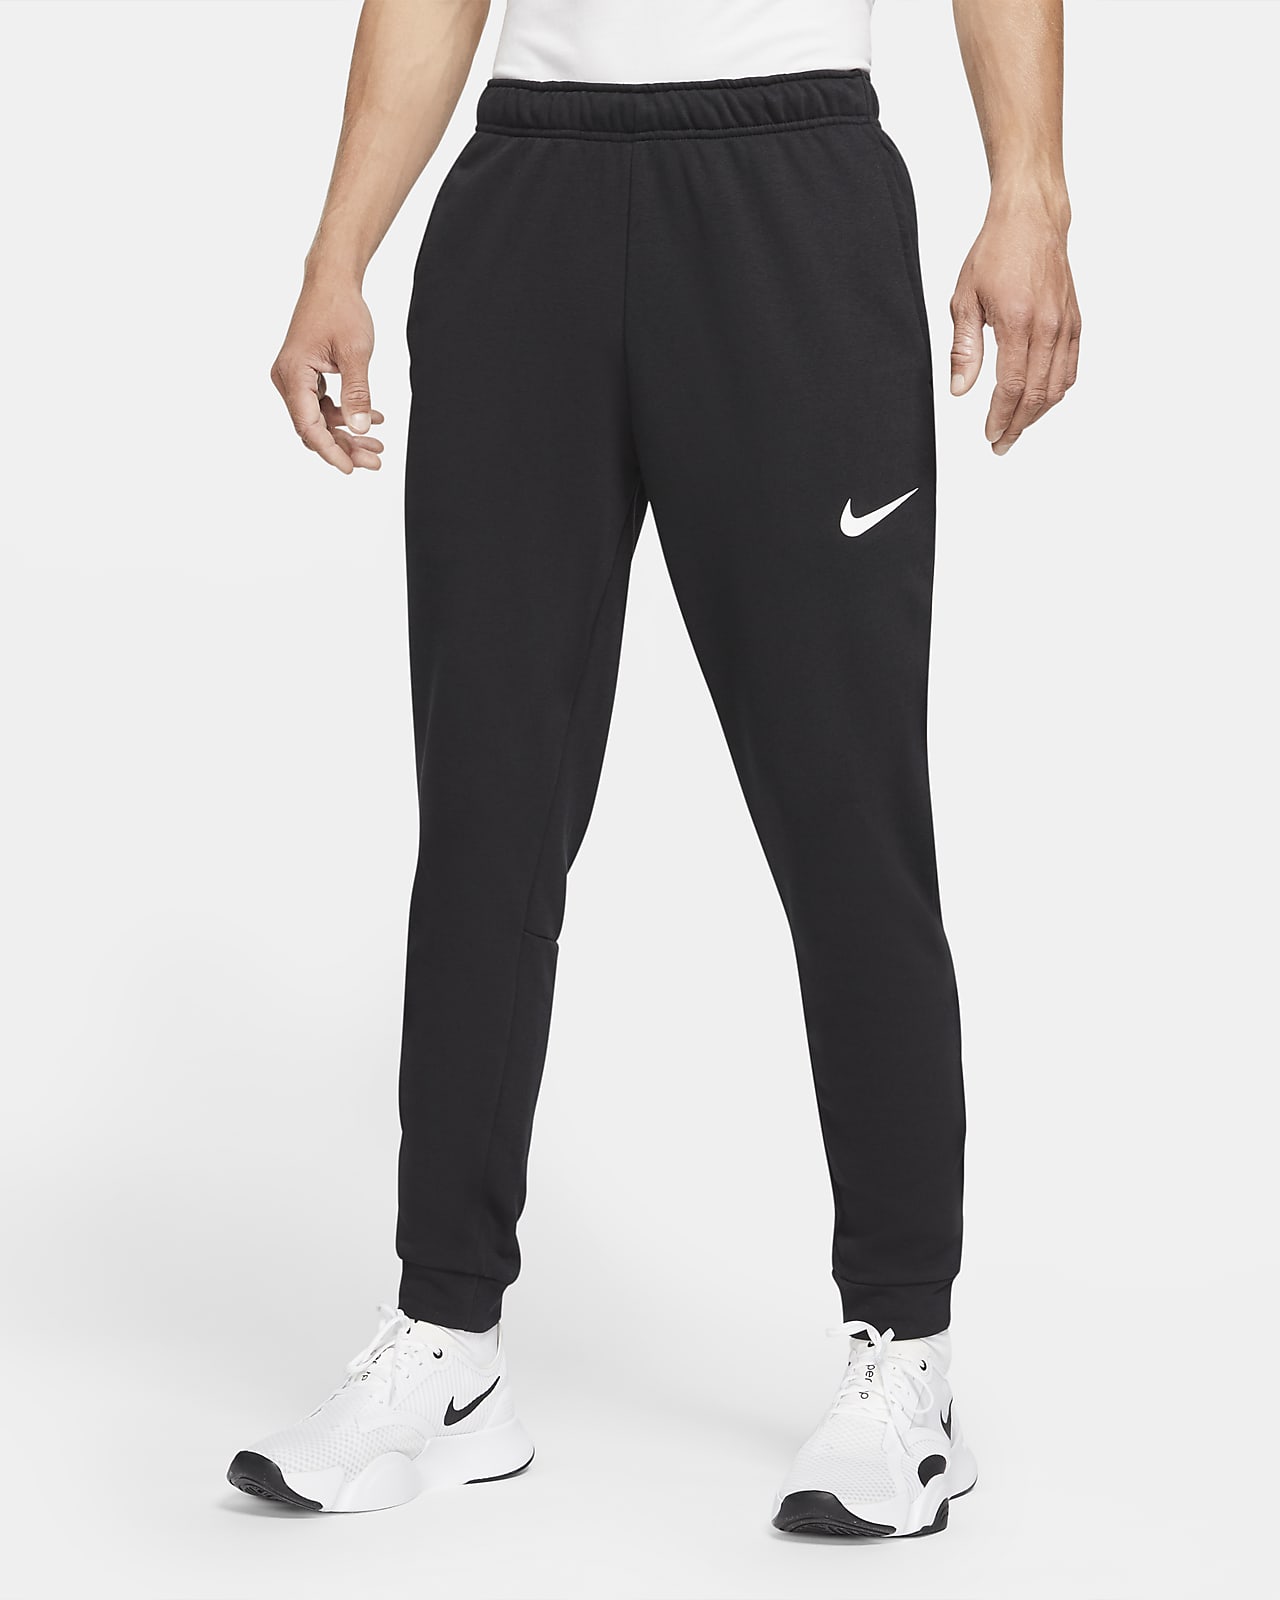 Pantaloni da training affusolati Nike Dri-FIT – Uomo